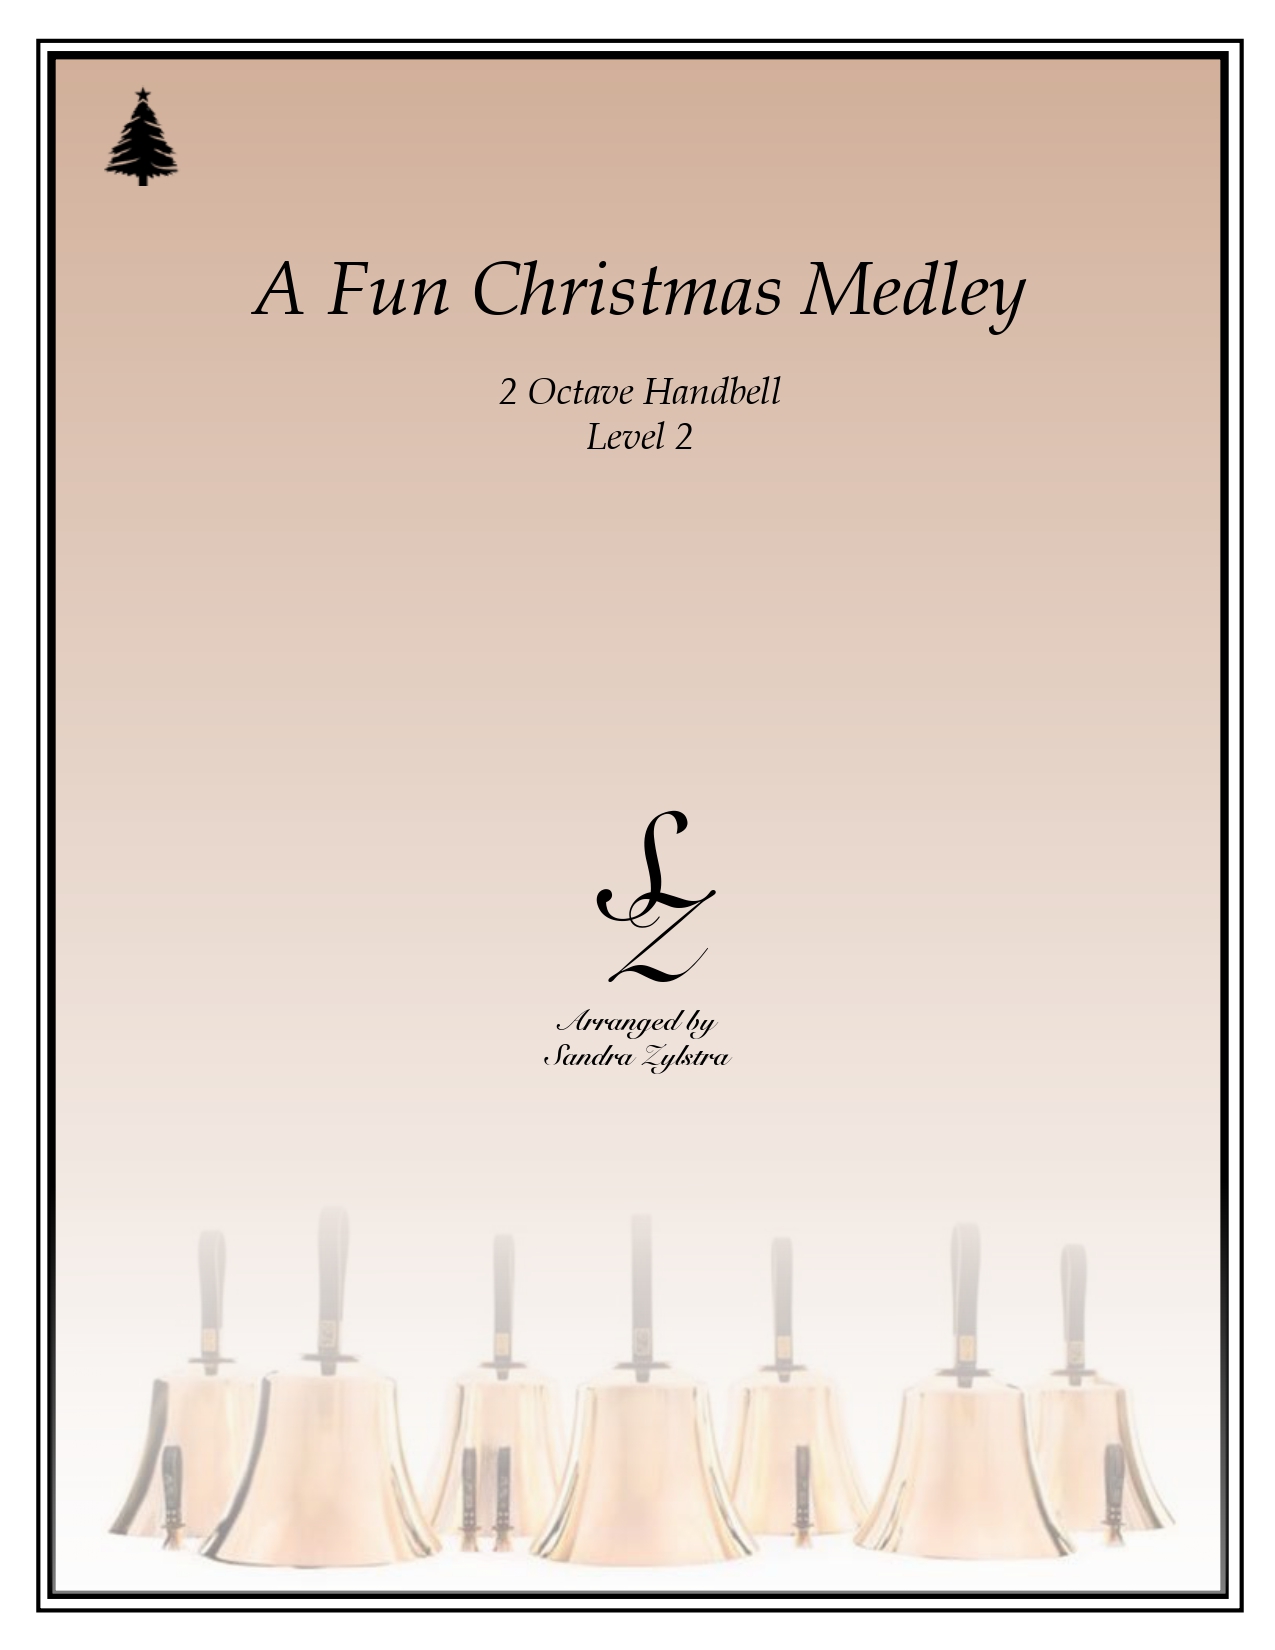 A Fun Christmas Medley 2 octave handbells cover page 00011